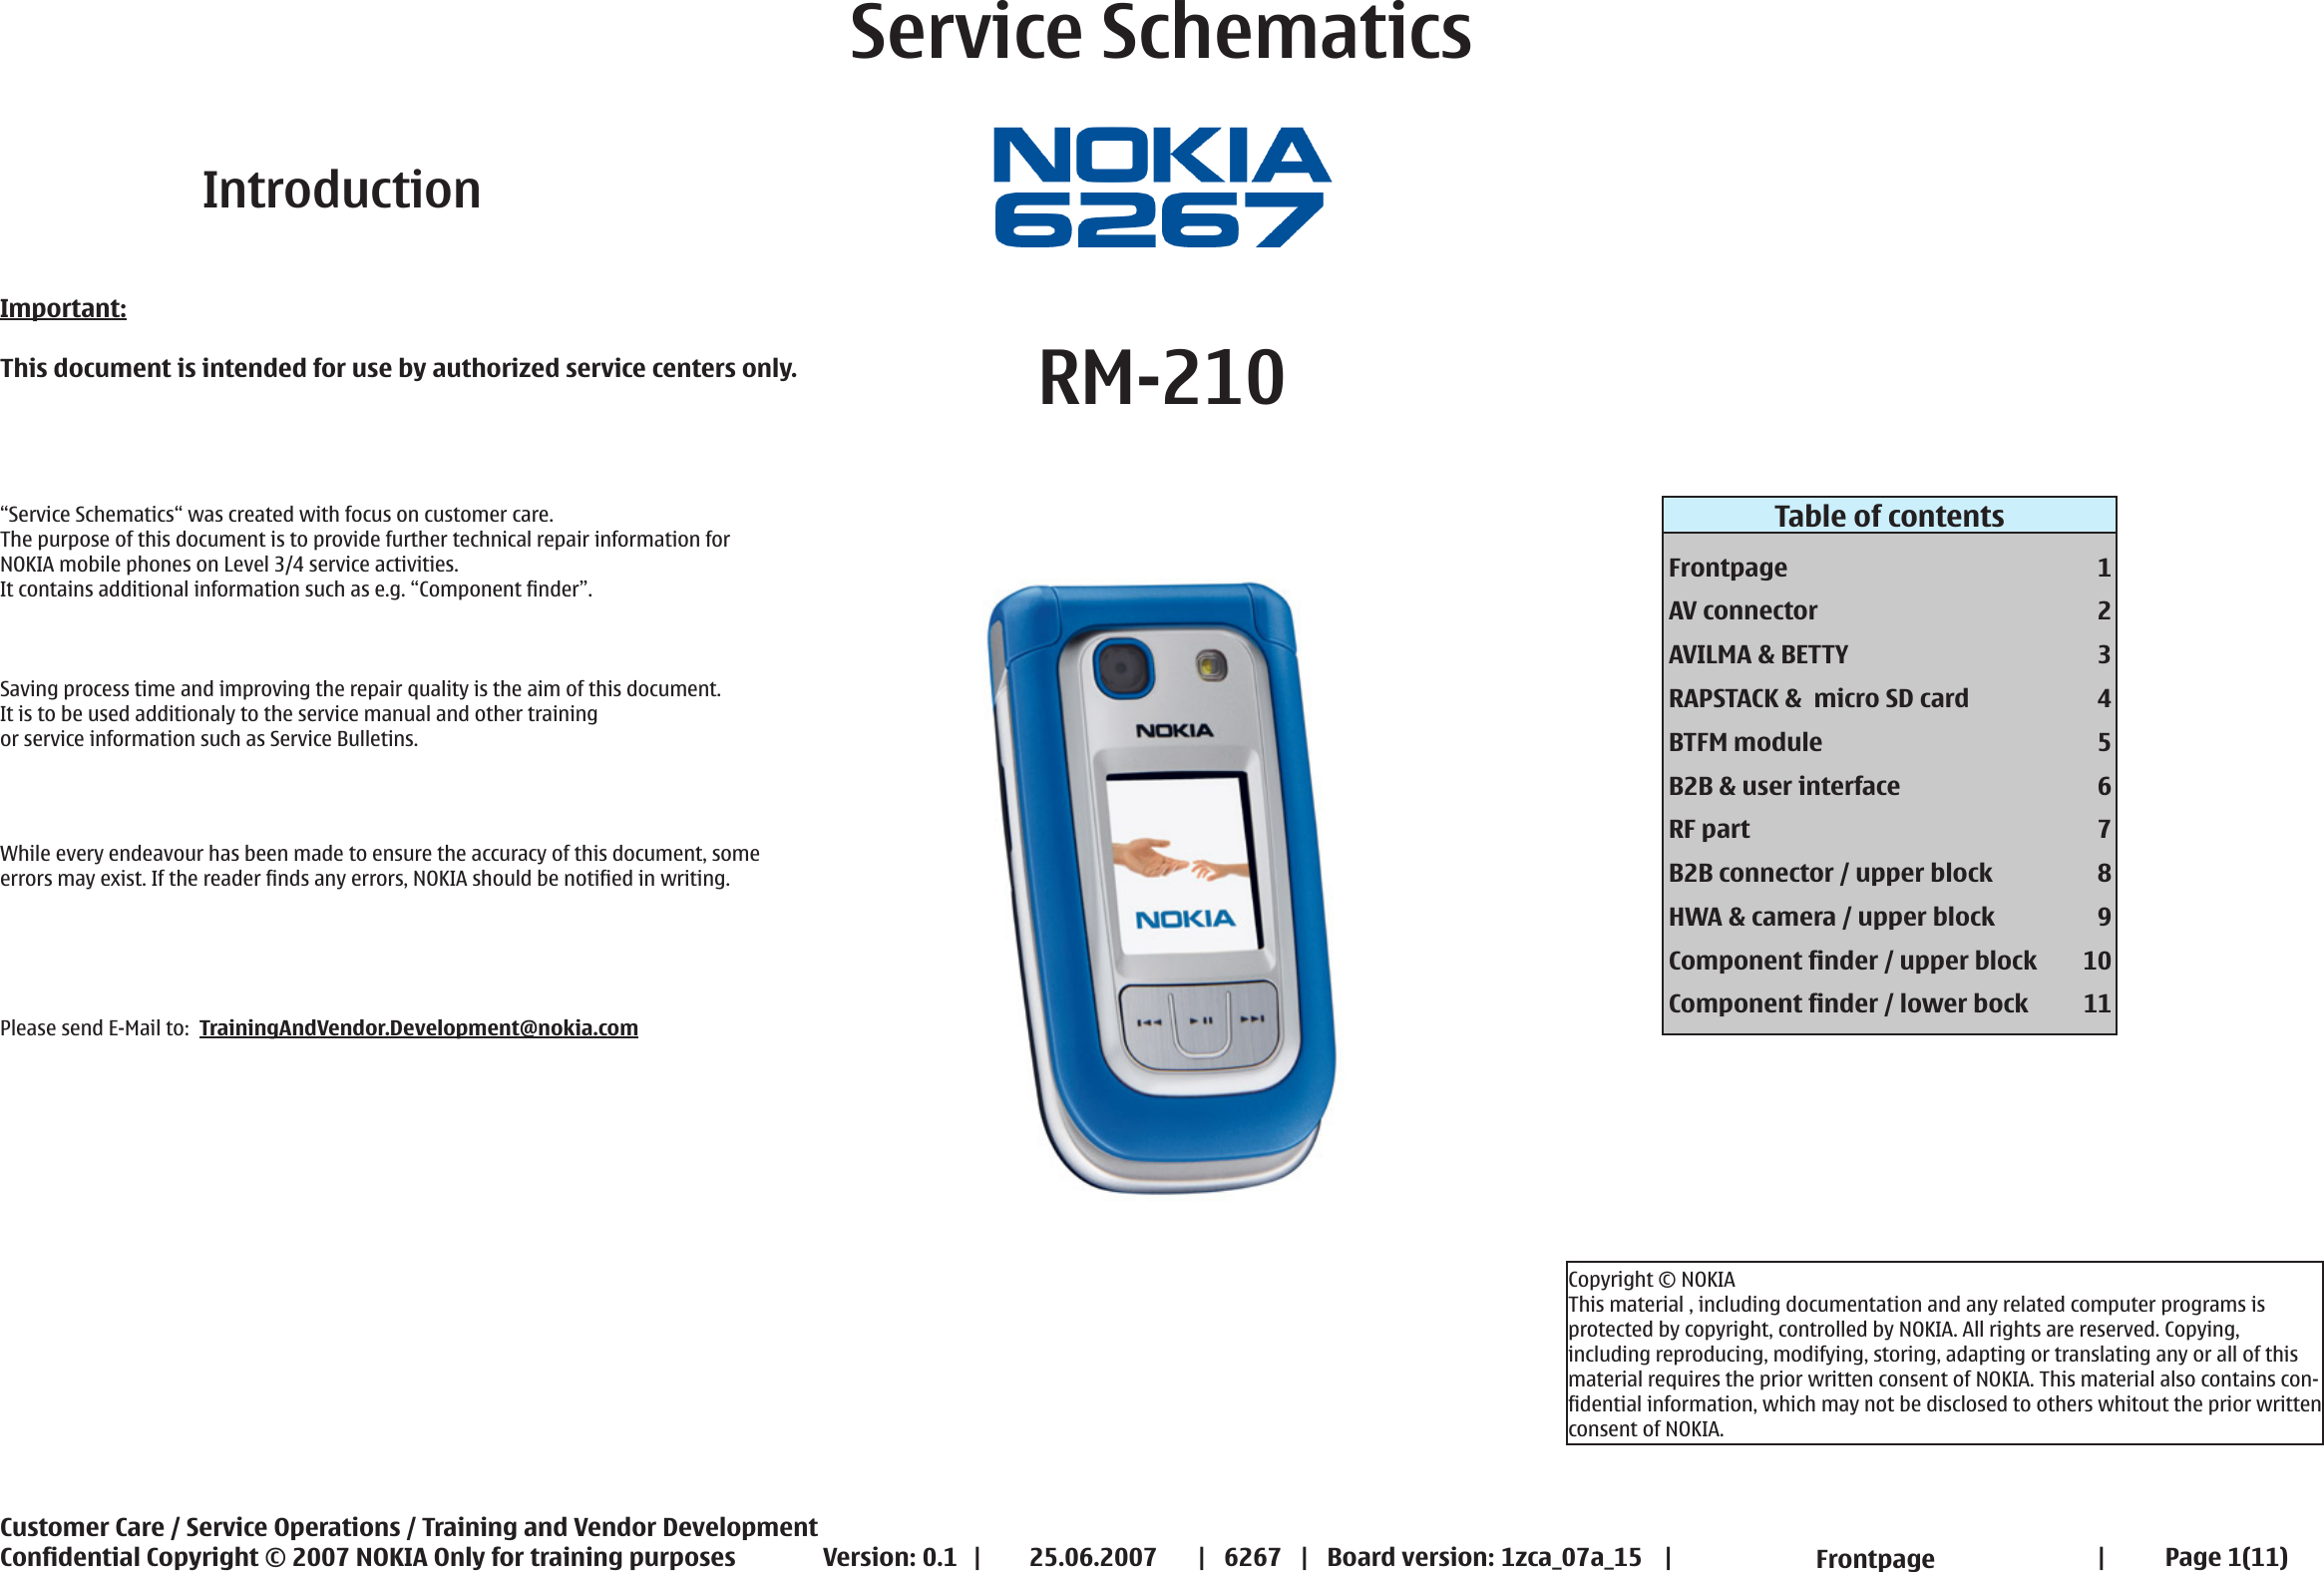 Page 1 of 11 - Nokia 6267 Rm-210 Service Schematics V0.1